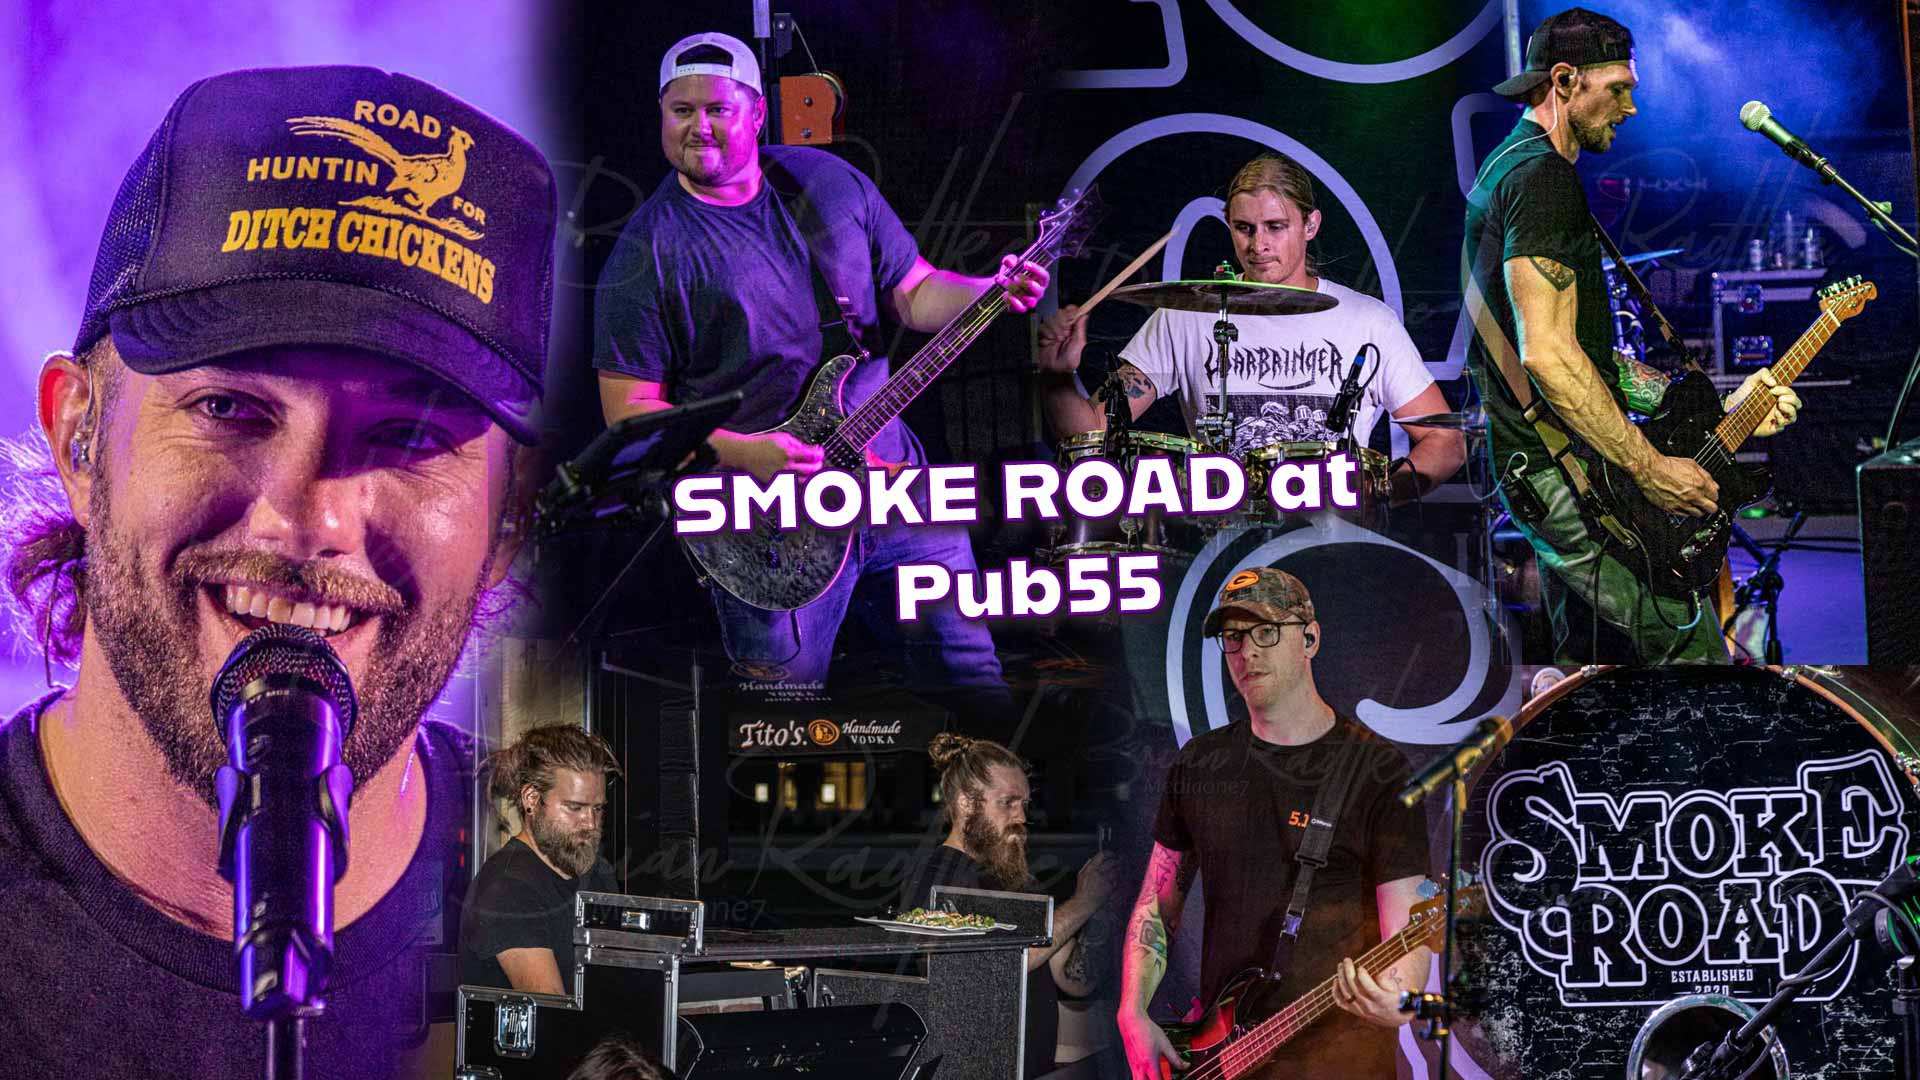 Smoke Road Band at Pub 55 in Kaukauna Wisconsin